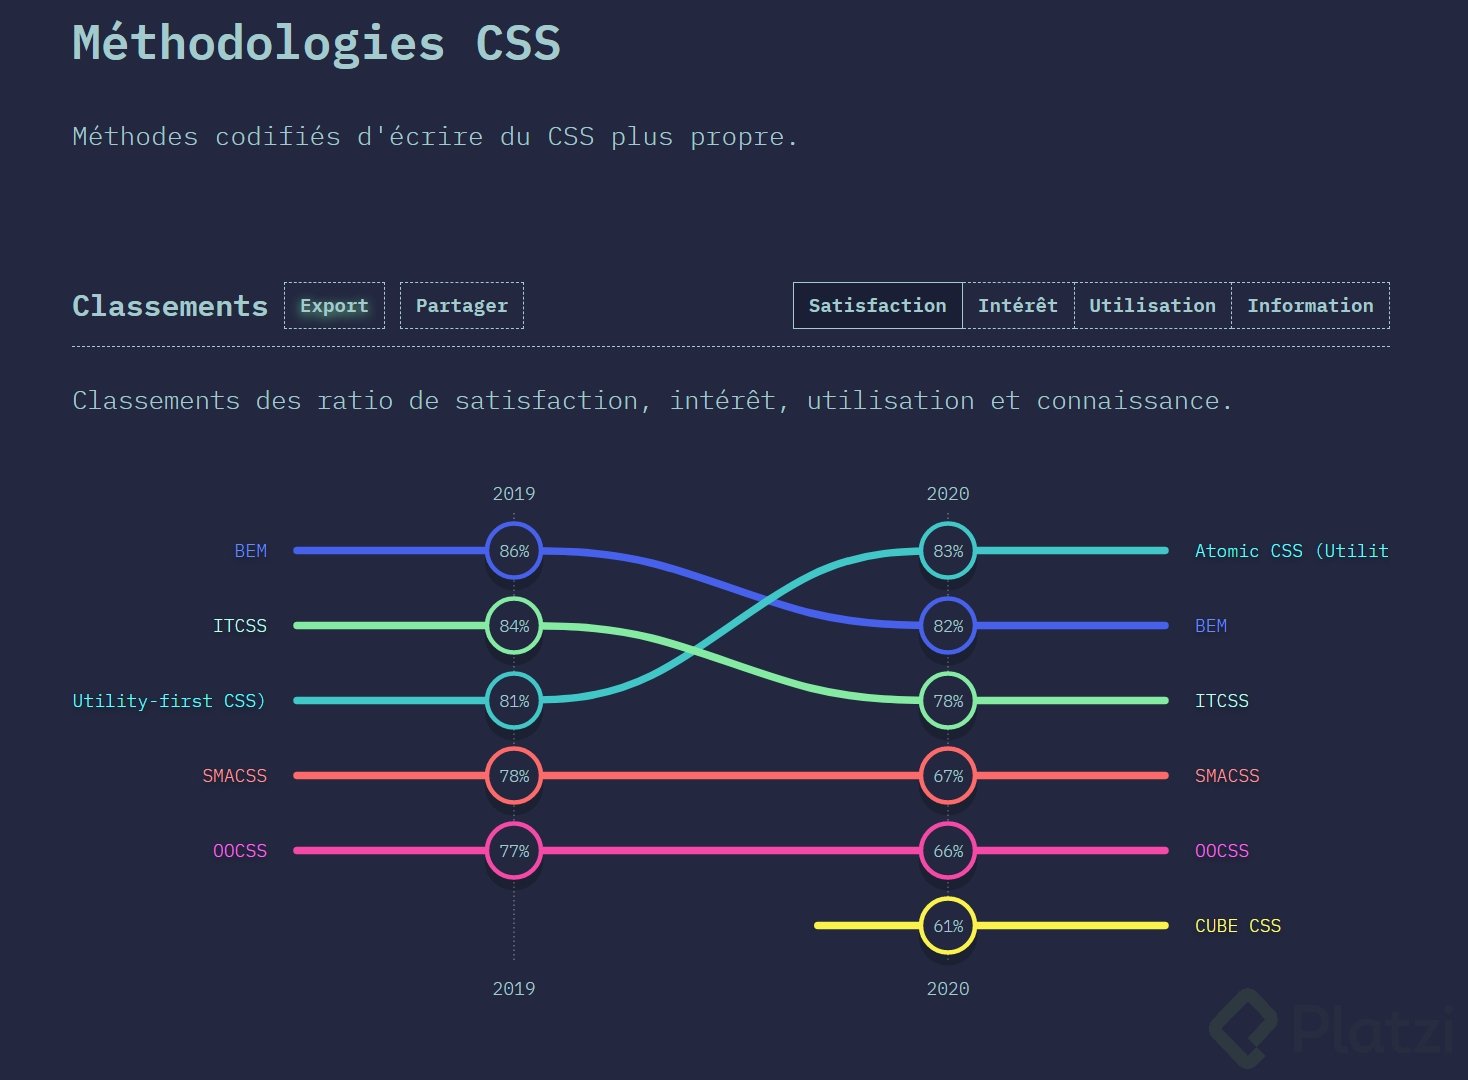 Methodologias CSS.png